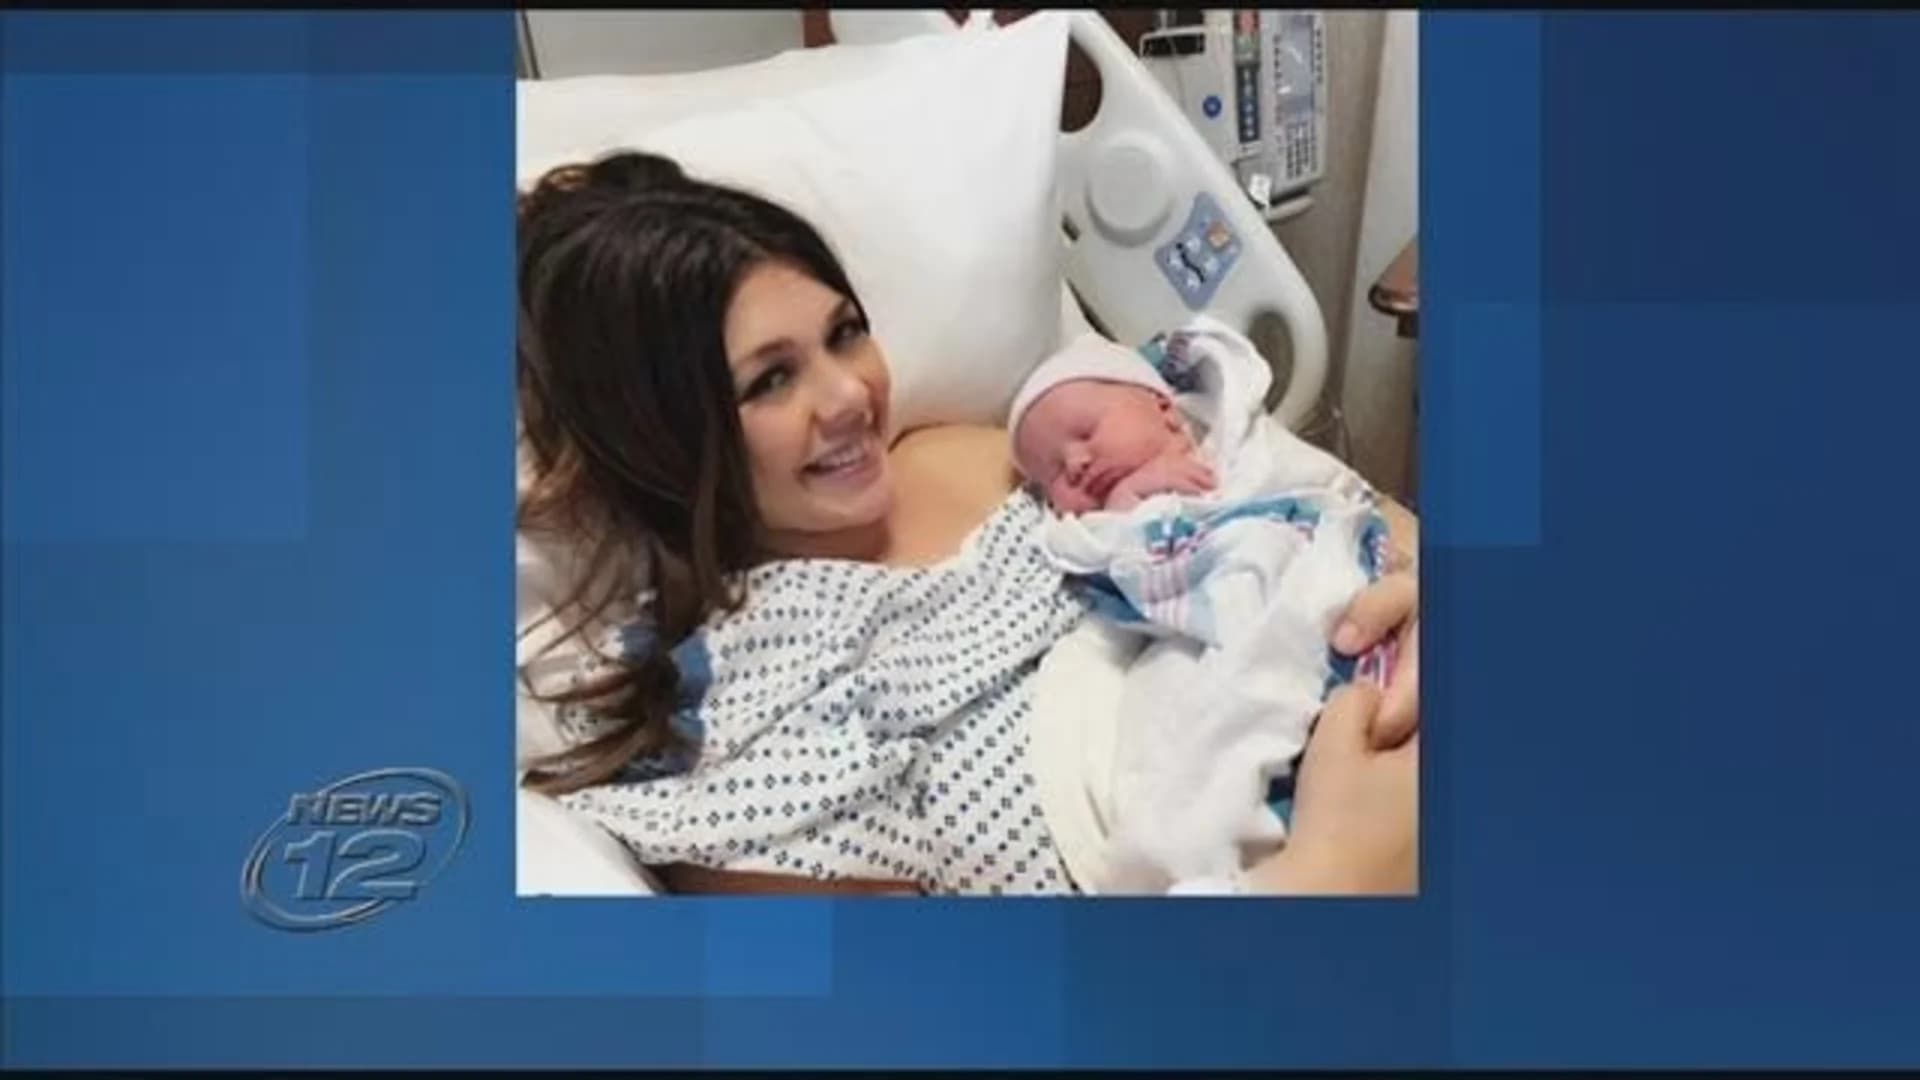 News 12’s Elisa DiStefano gives birth to baby girl!